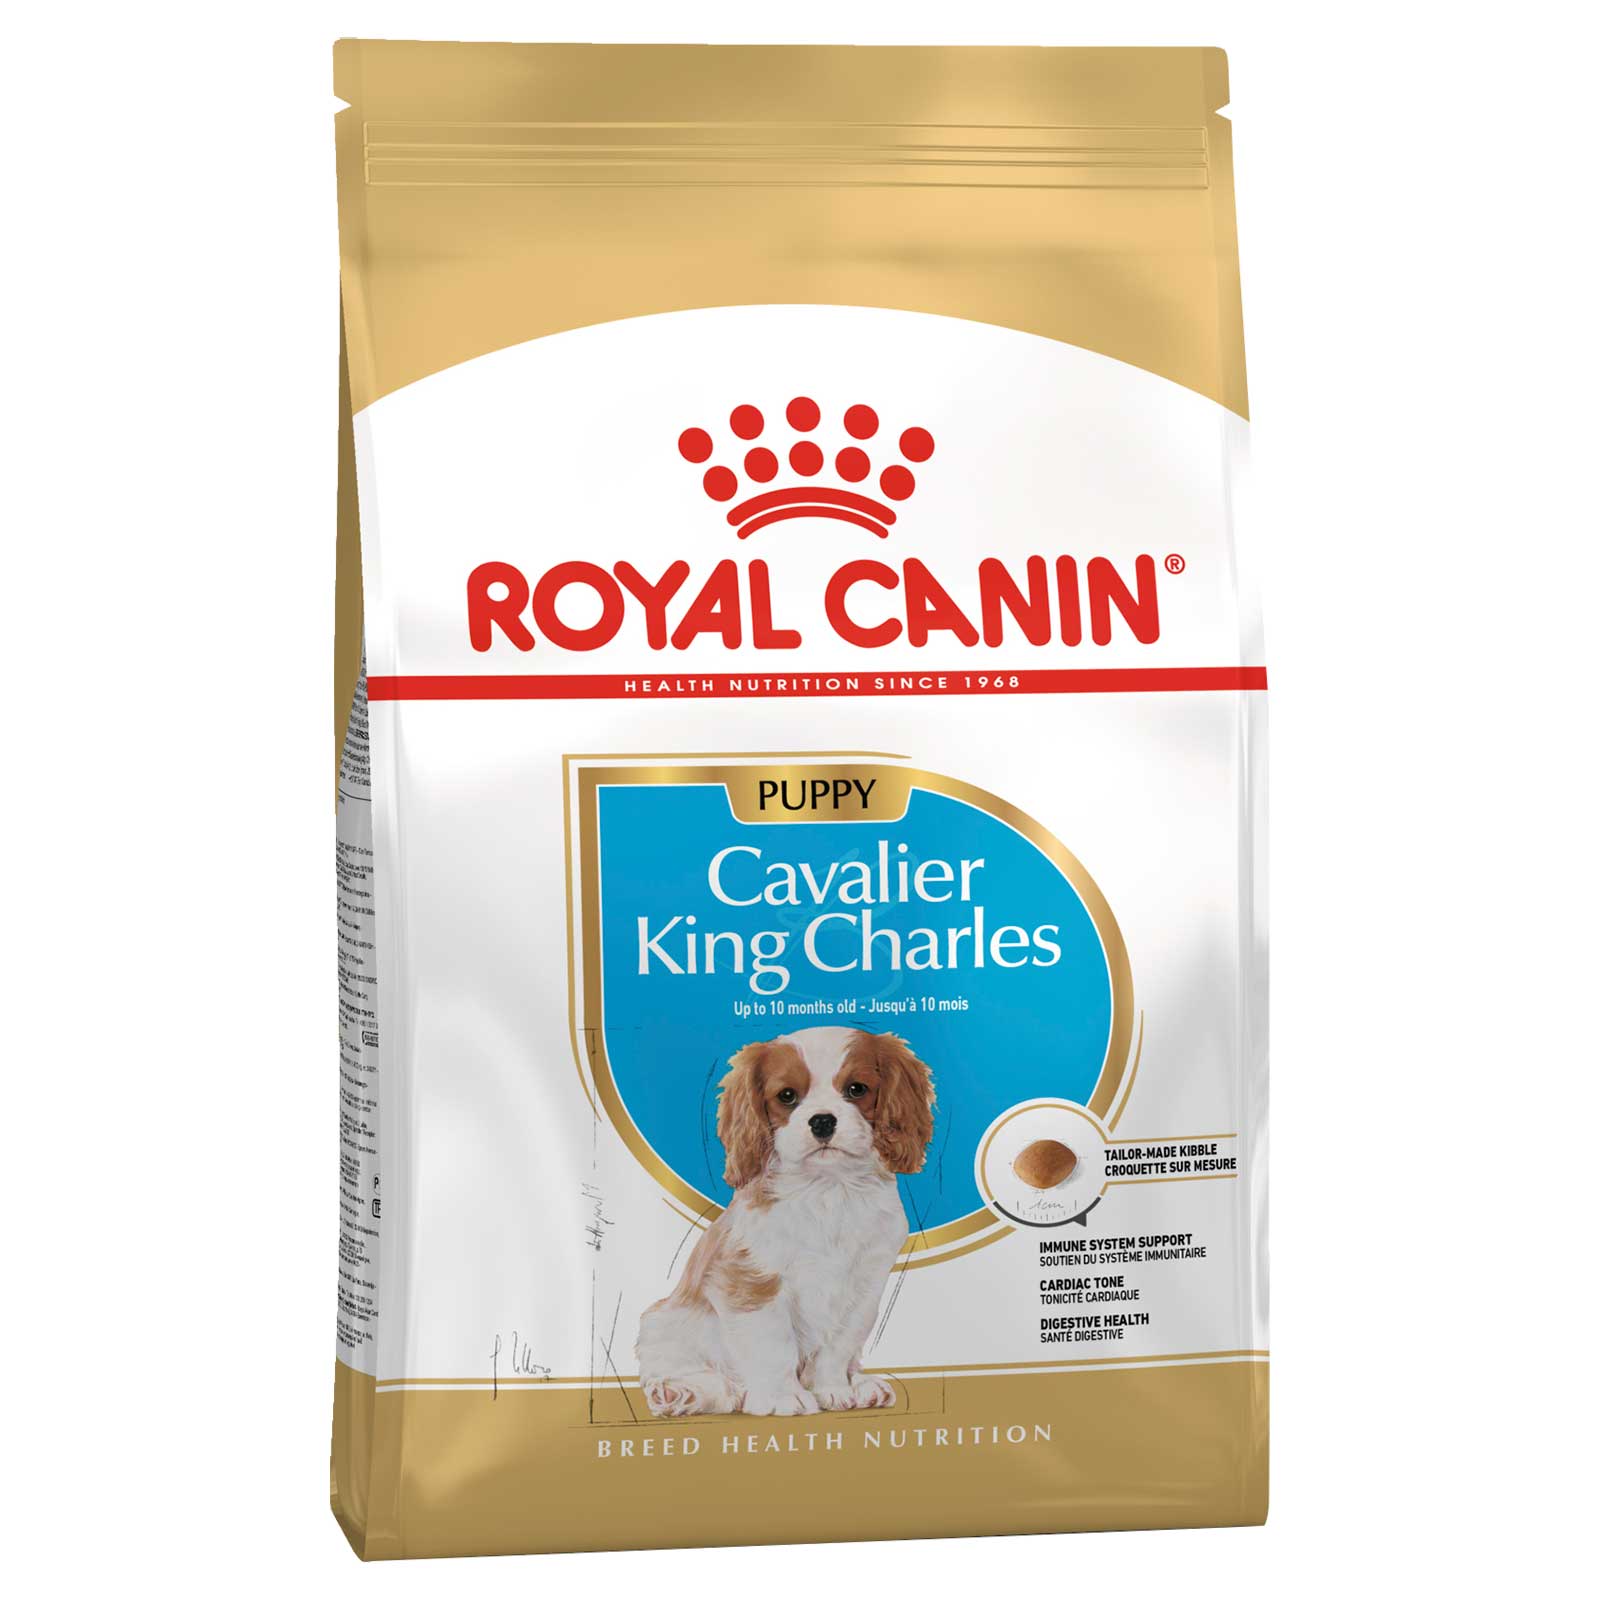 Royal Canin Dog Food Puppy Cavalier King Charles